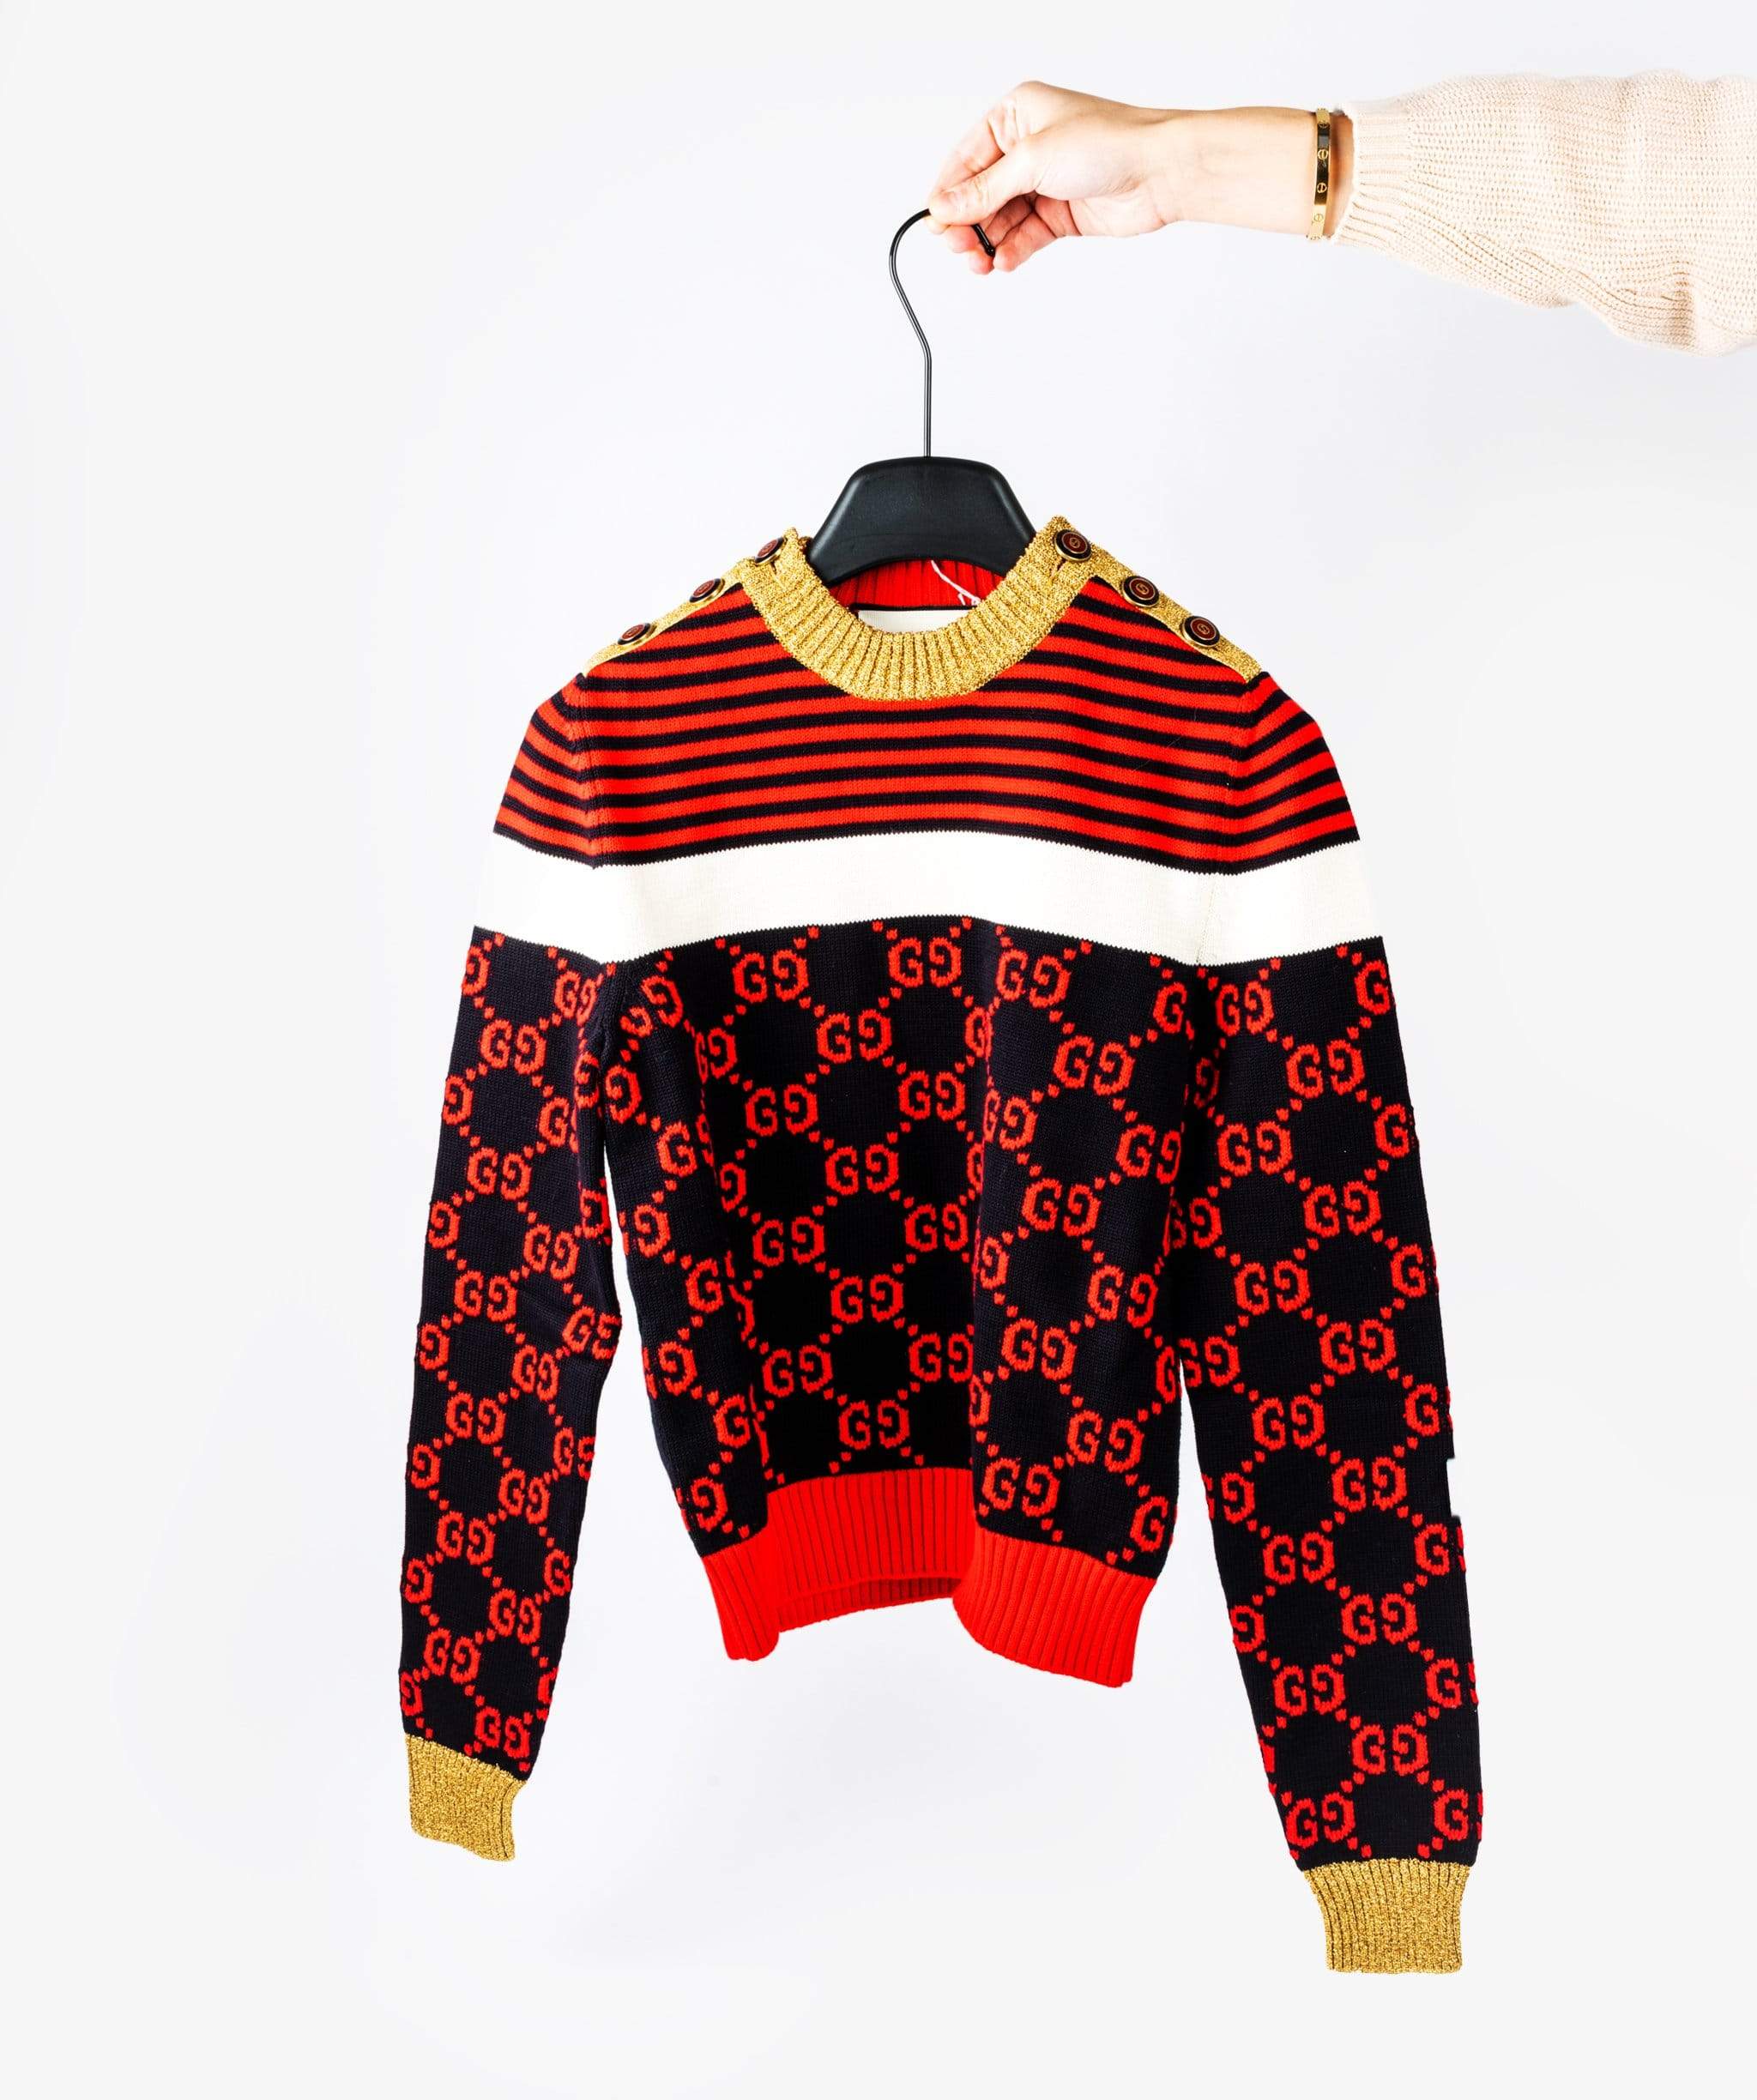 Louis Vuitton x Supreme - Authenticated Box Logo Sweatshirt - Cotton Red for Men, Never Worn